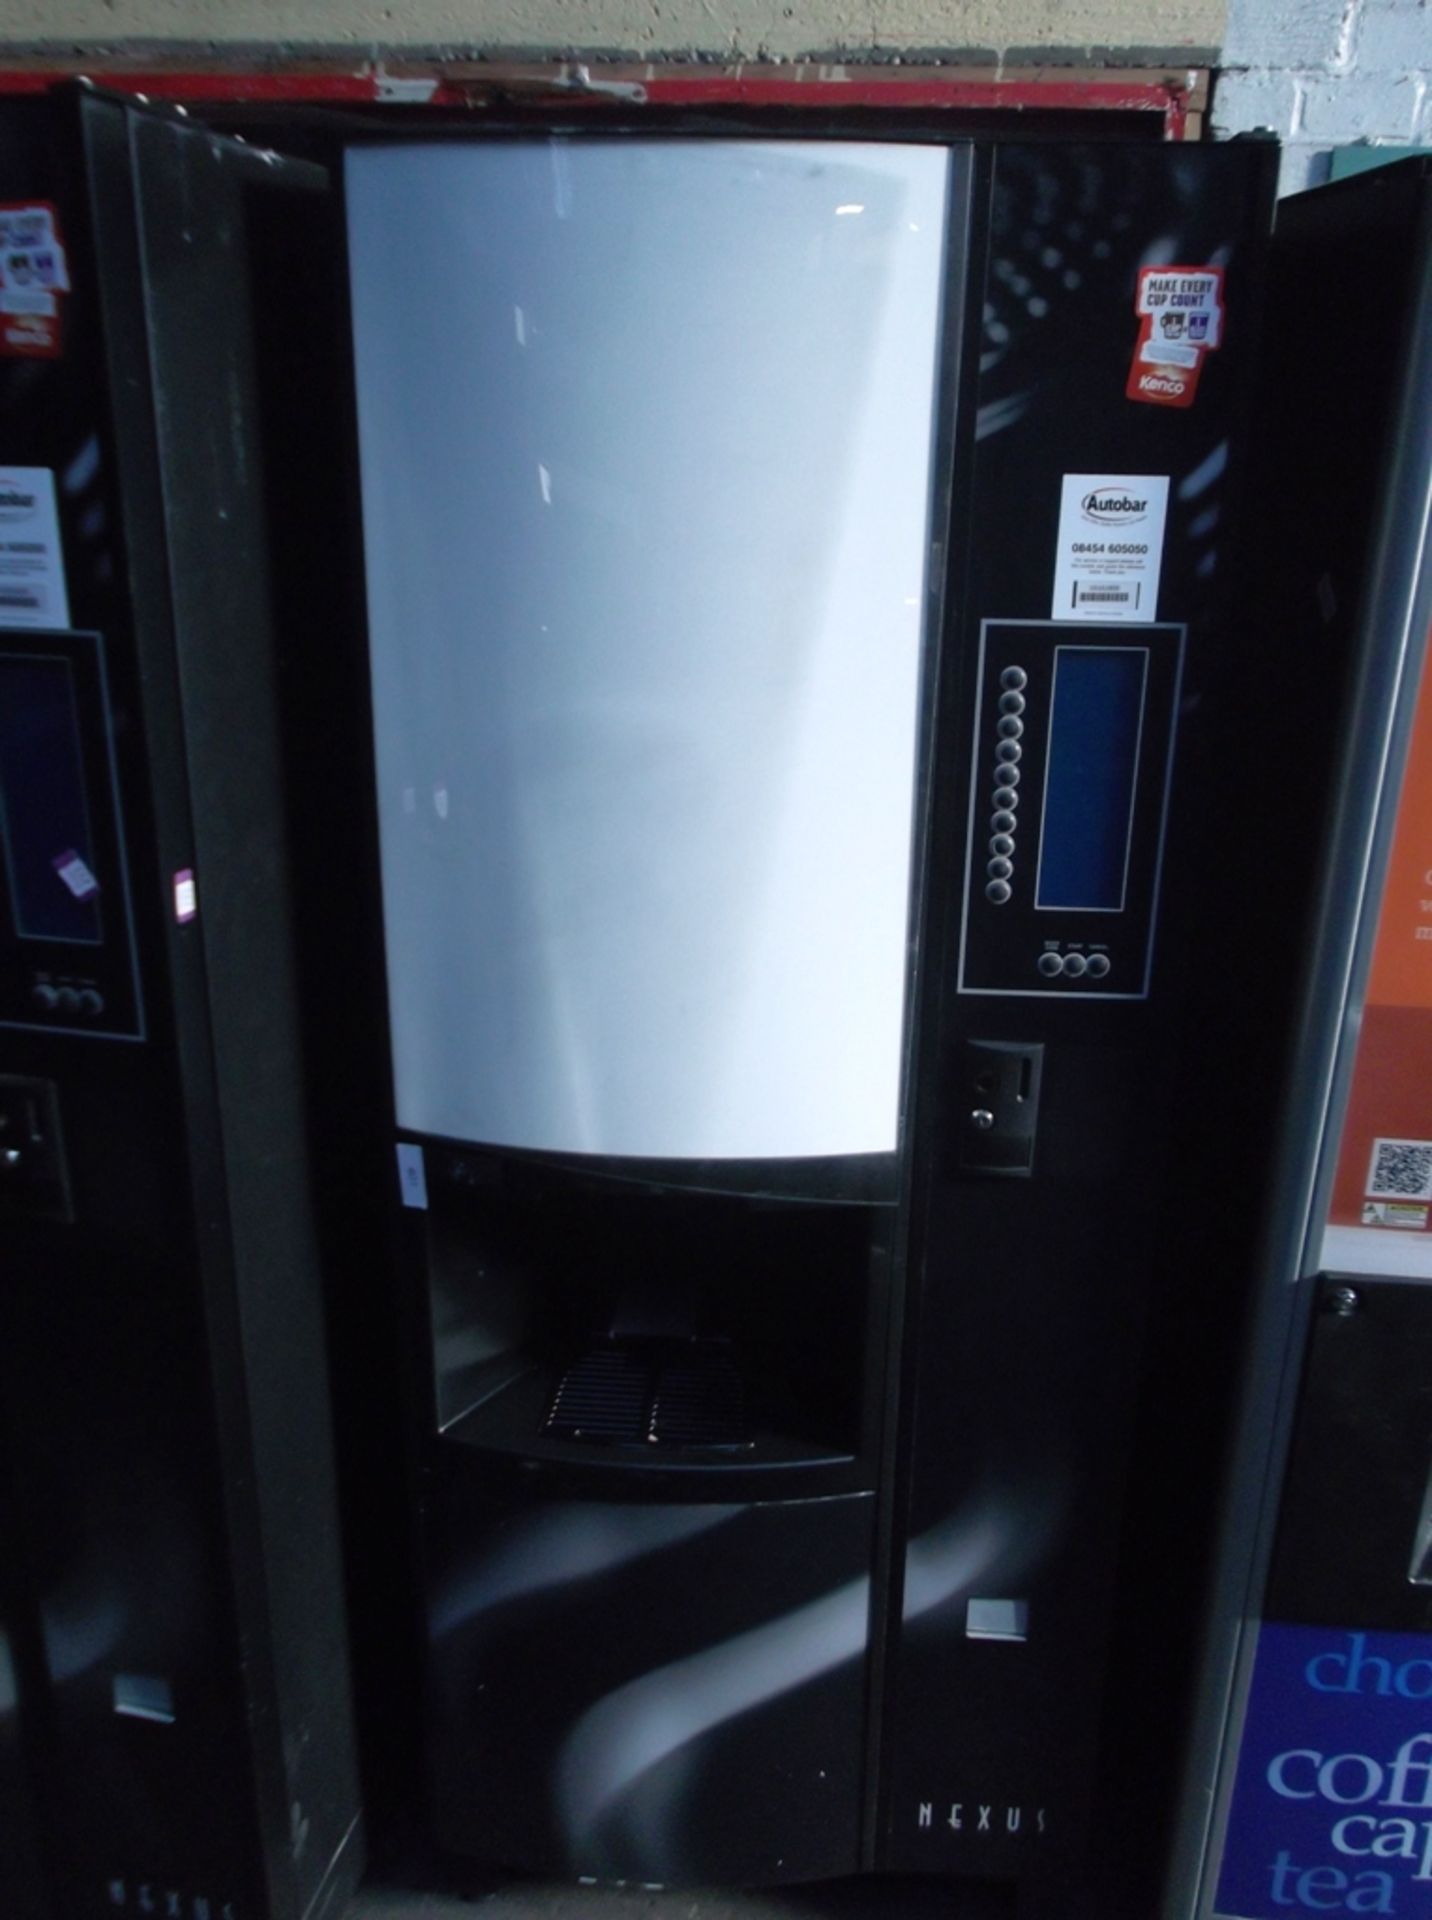 NEXUS AZKOYEN Drinks Vending Machine - Locked No keys